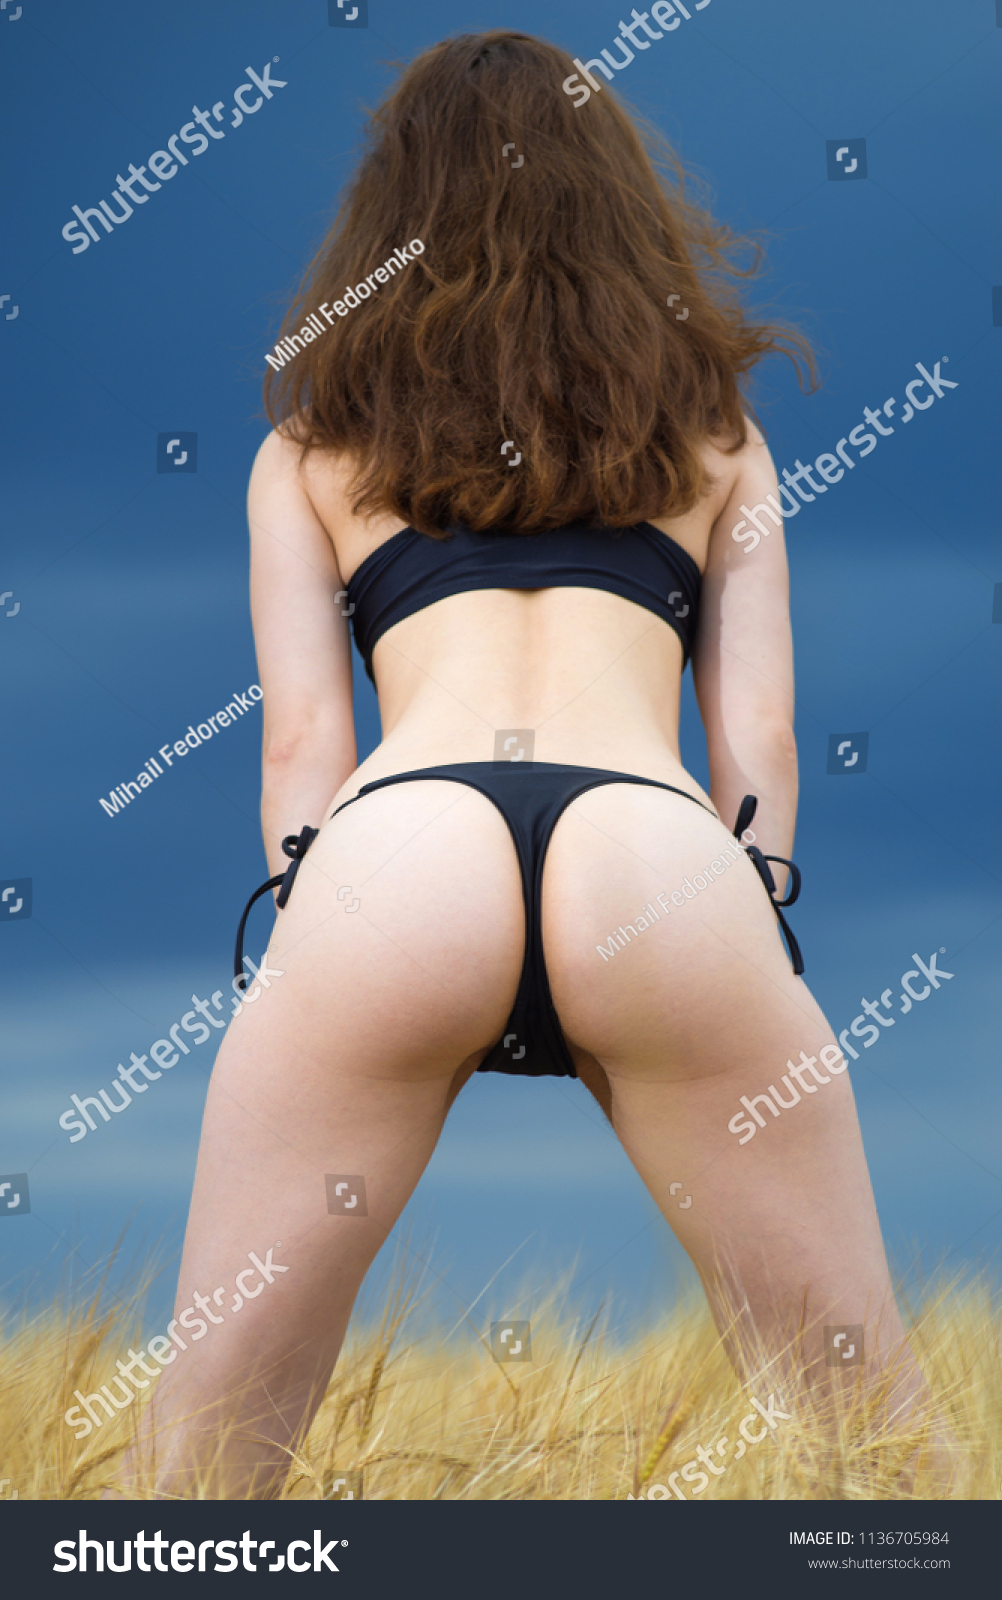 christopher braga recommends hot ass in bikini pic